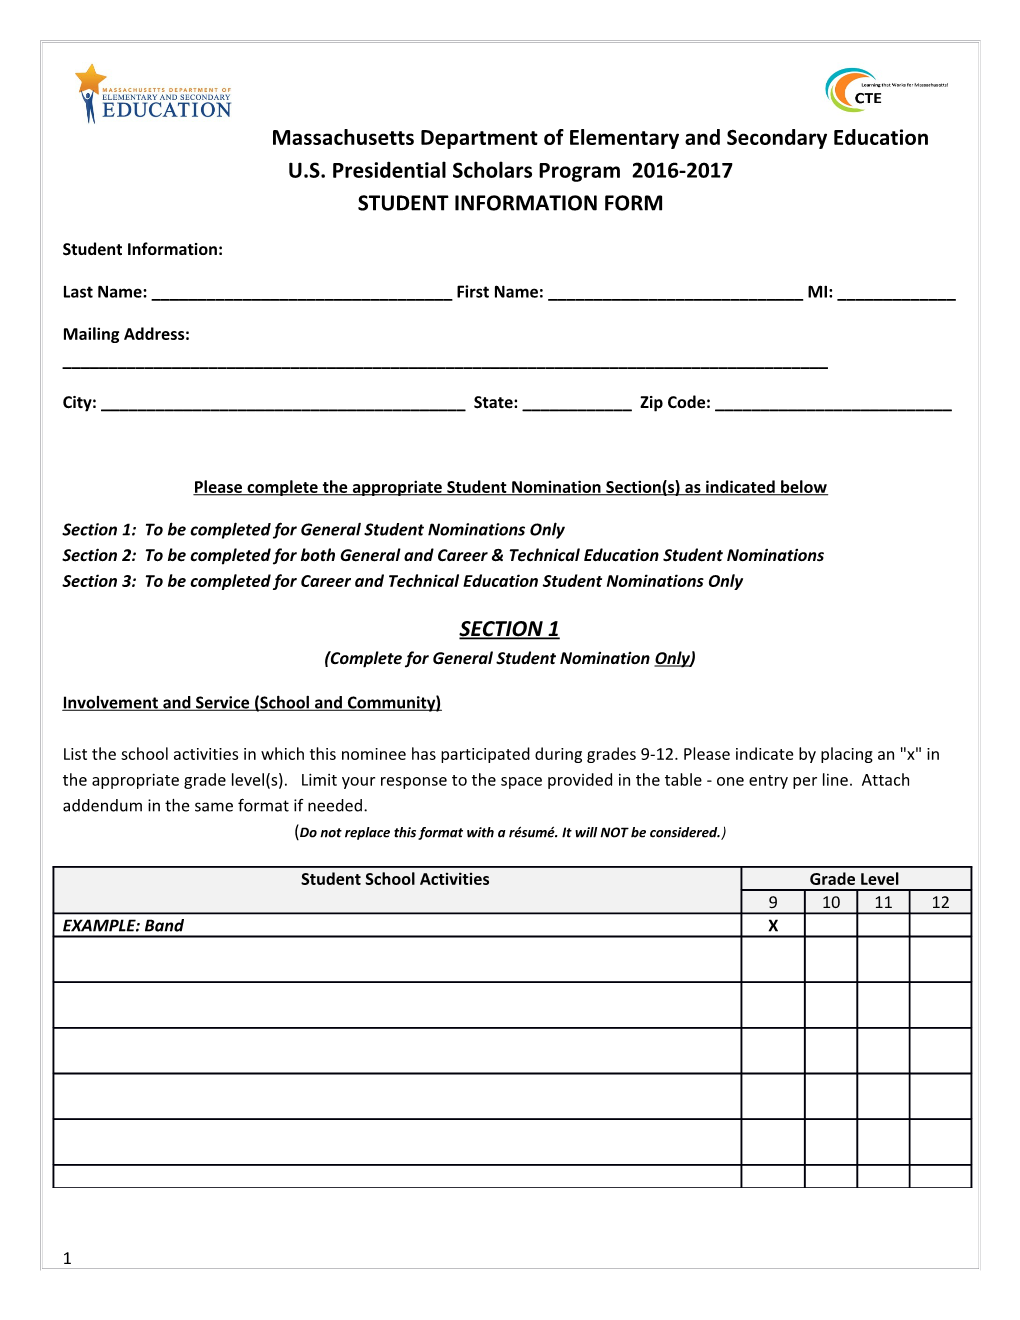 Presidential Scholars Program - Student Information Form